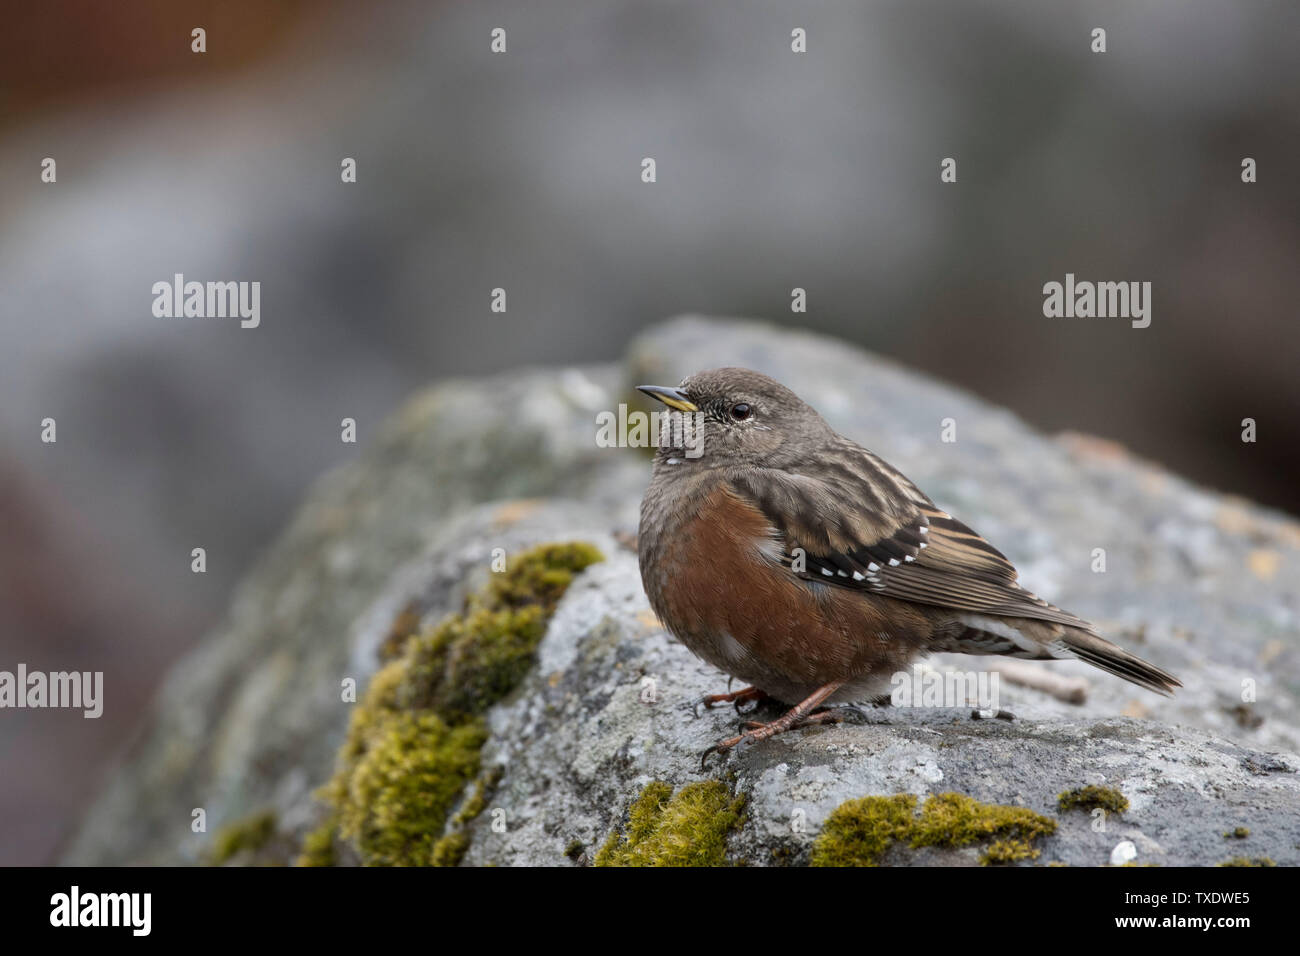 Robin Accentor bird seduto sulla roccia, Uttarakhand, India, Asia Foto Stock